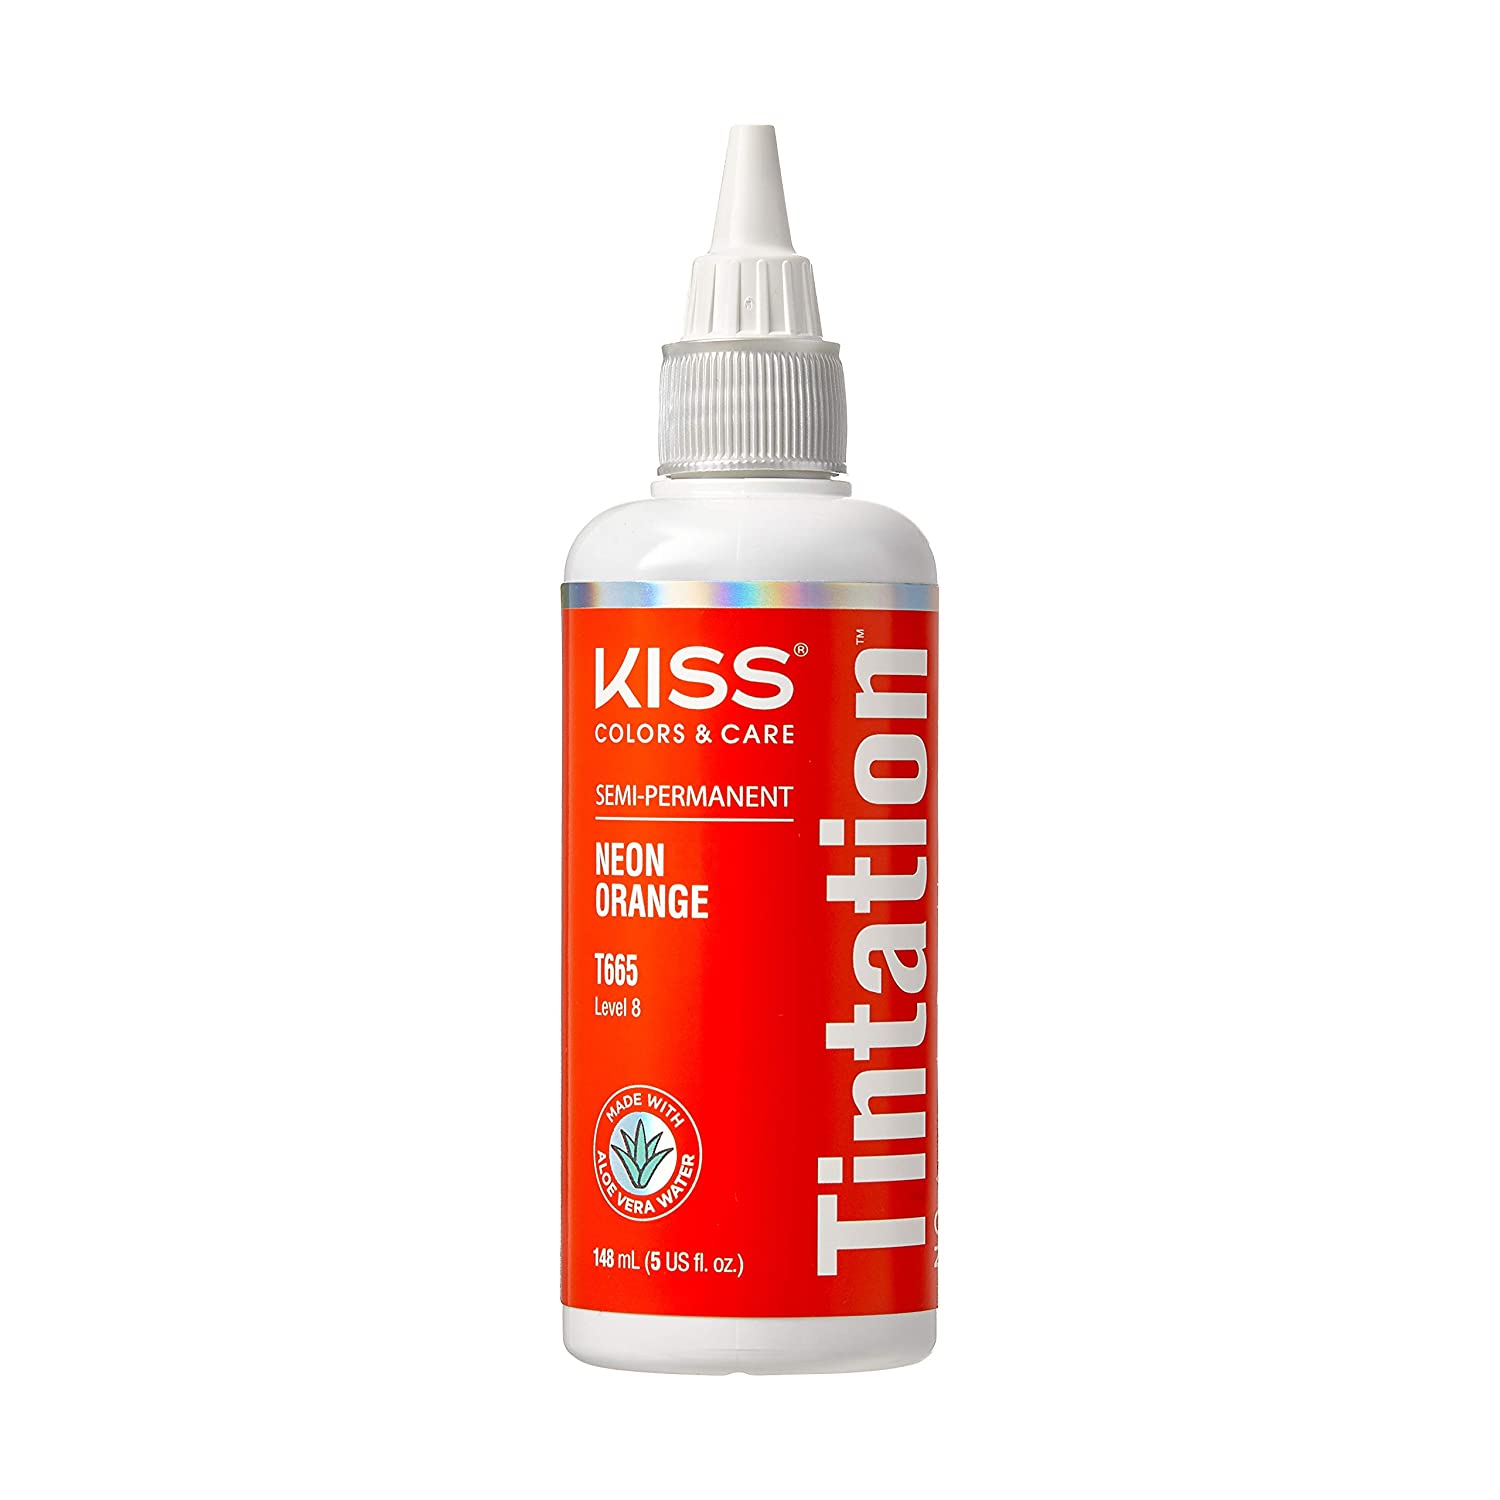 Kiss Tintation Semi-Permanent Neon Orange Hair Color